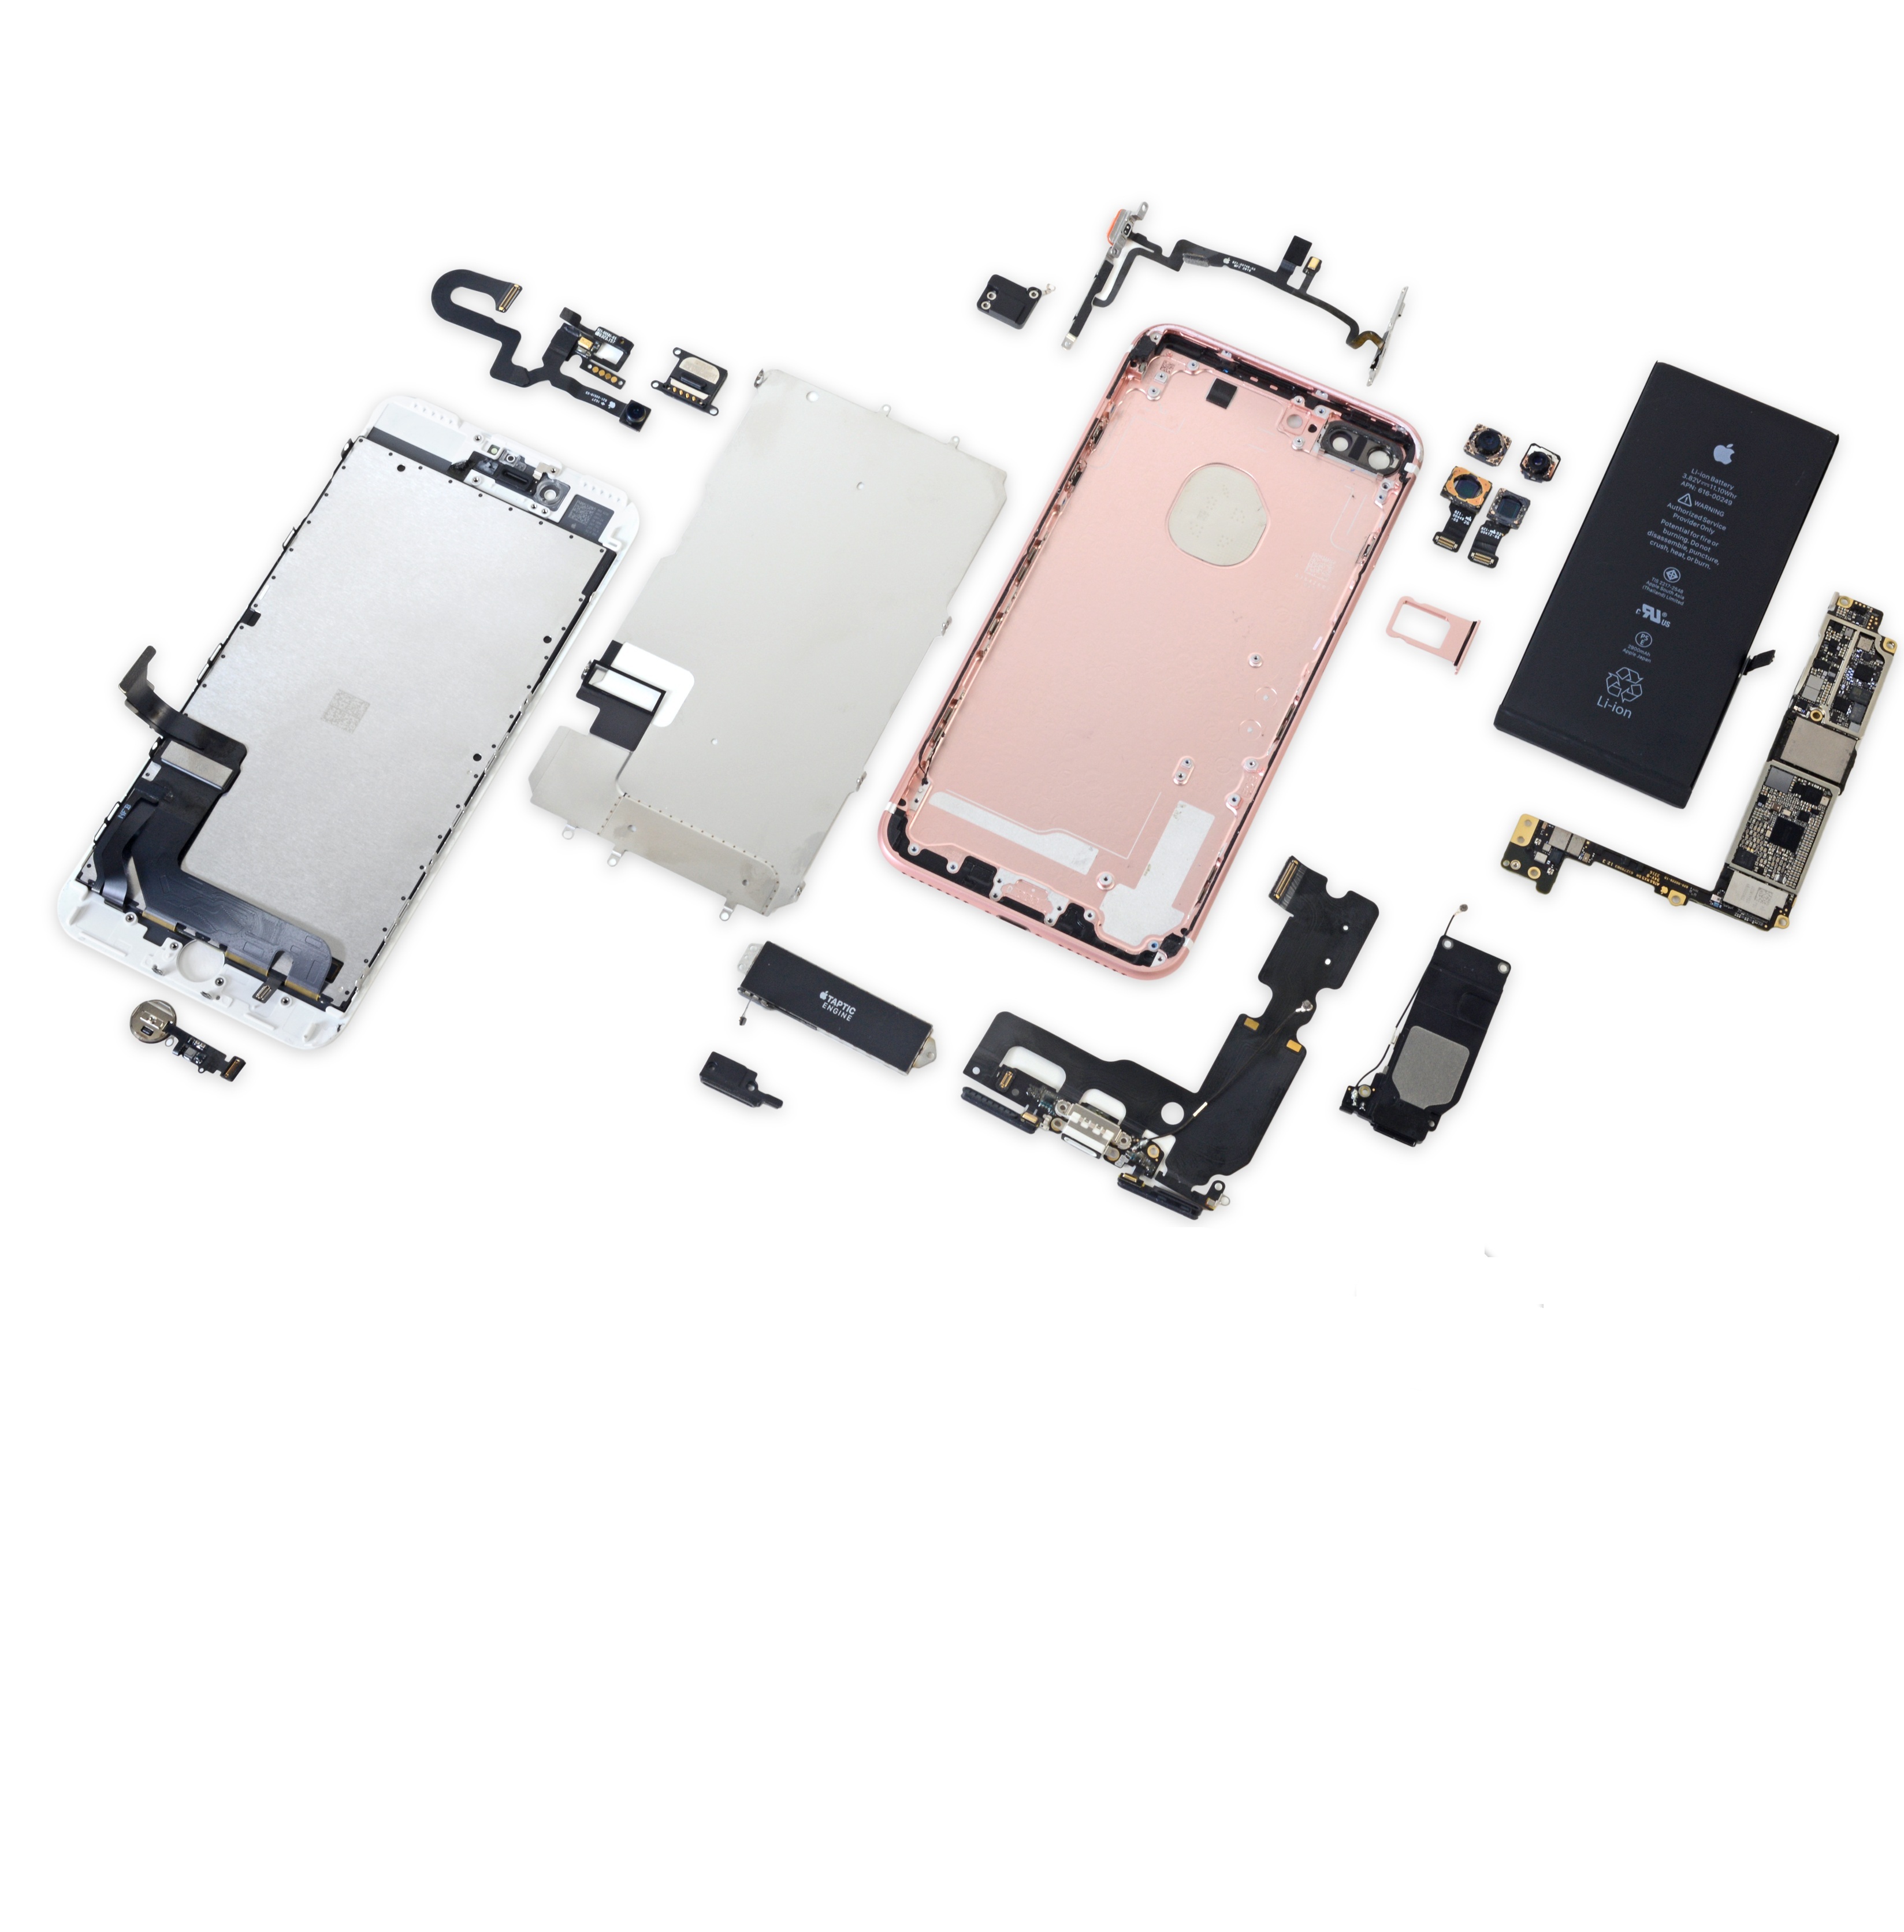 Apple iPhone 7 mic Repairing, Apple iPhone 7 Speaker Repairing, Apple iPhone 7 Ringer Repairing, Apple iPhone 7 Camra Repairing , Apple iPhone 7 Charging Repairing, Apple iPhone 7 WiFi Repairing